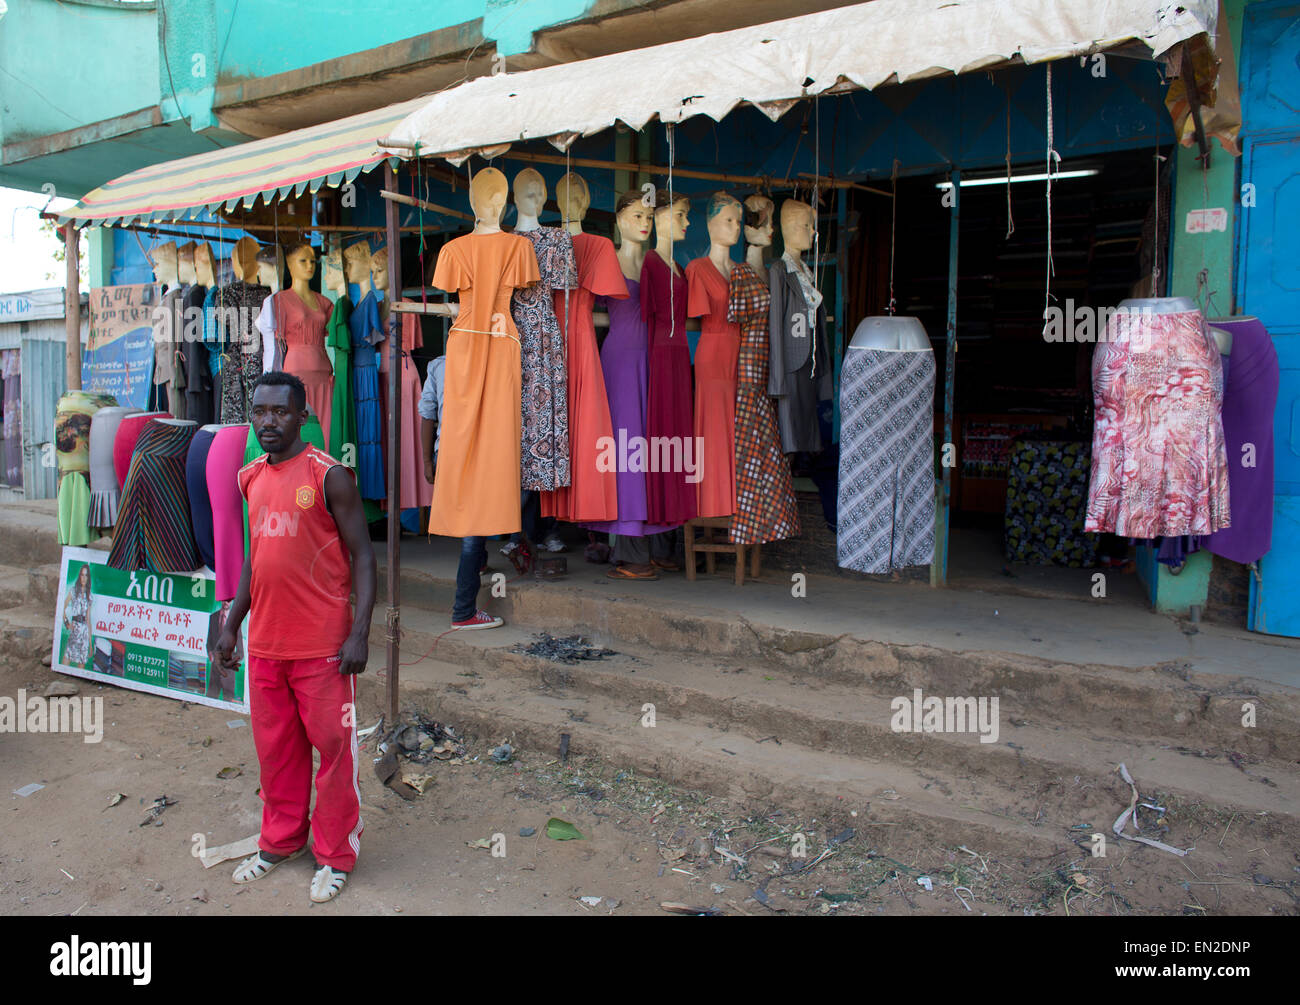 Clothes shop ethiopia africa fotografías e imágenes de alta resolución -  Alamy